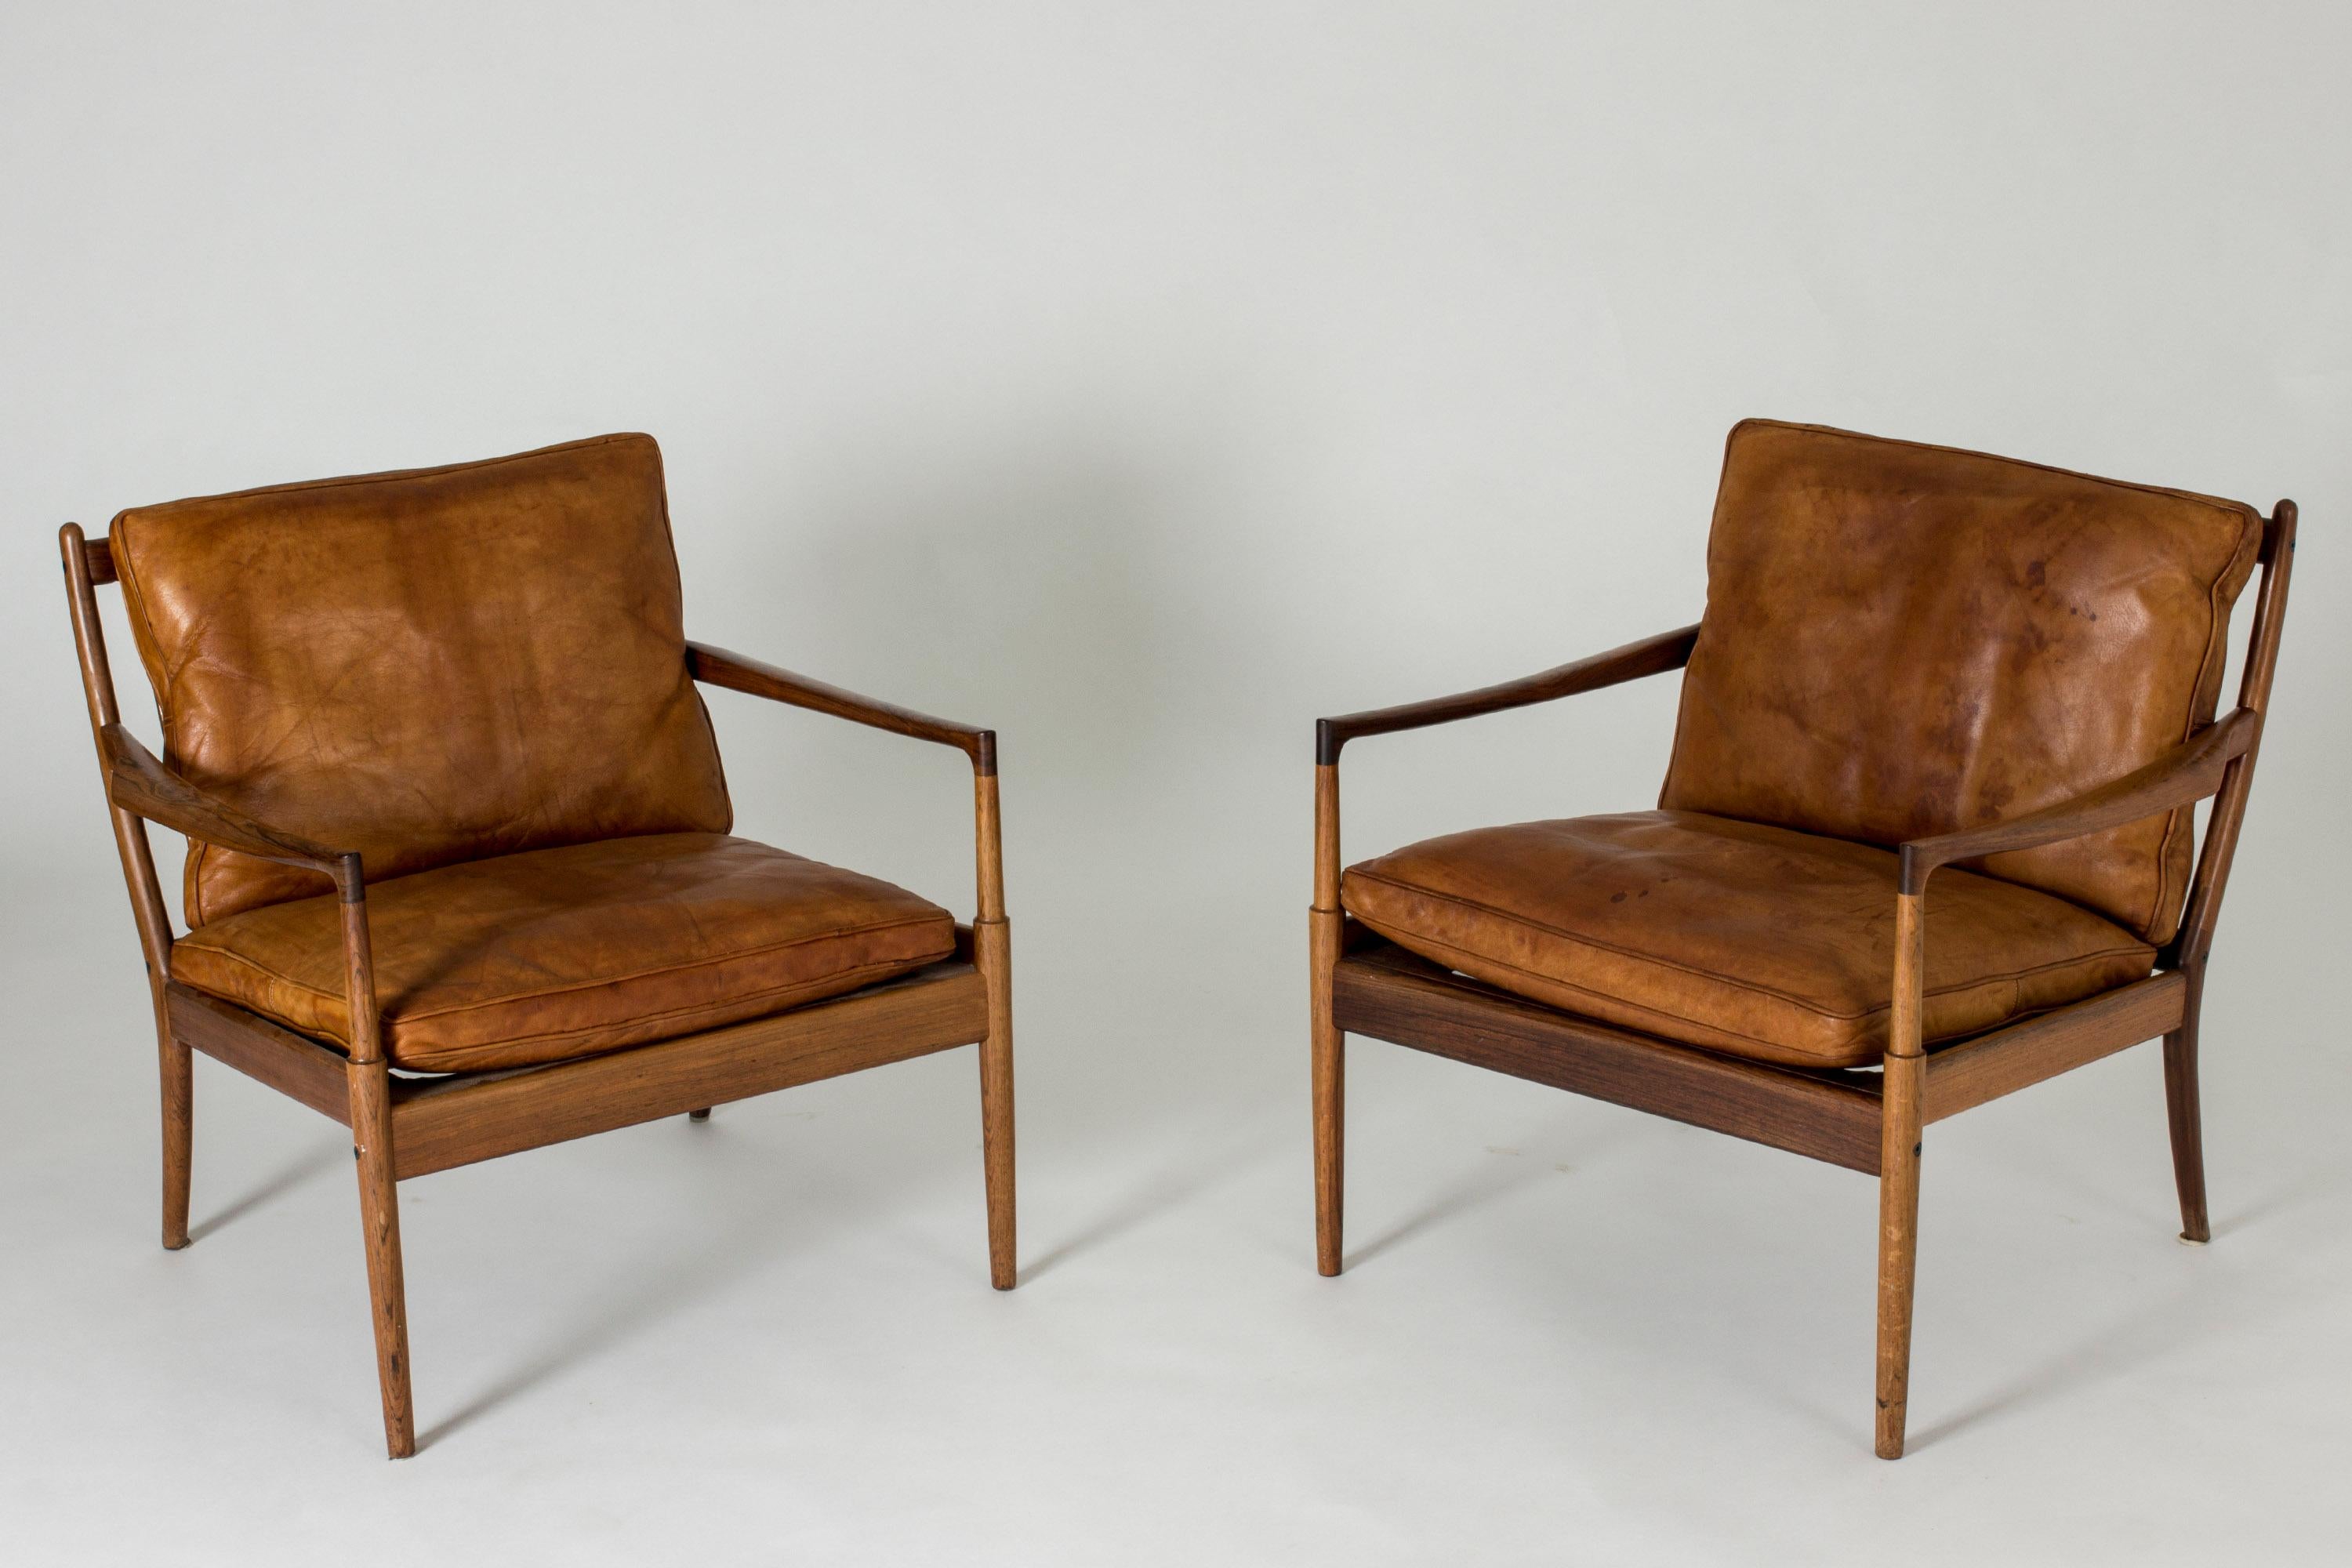 Scandinavian Modern Pair of Rosewood and Leather “Samsö” Lounge Chairs by Ib Kofod Larsen